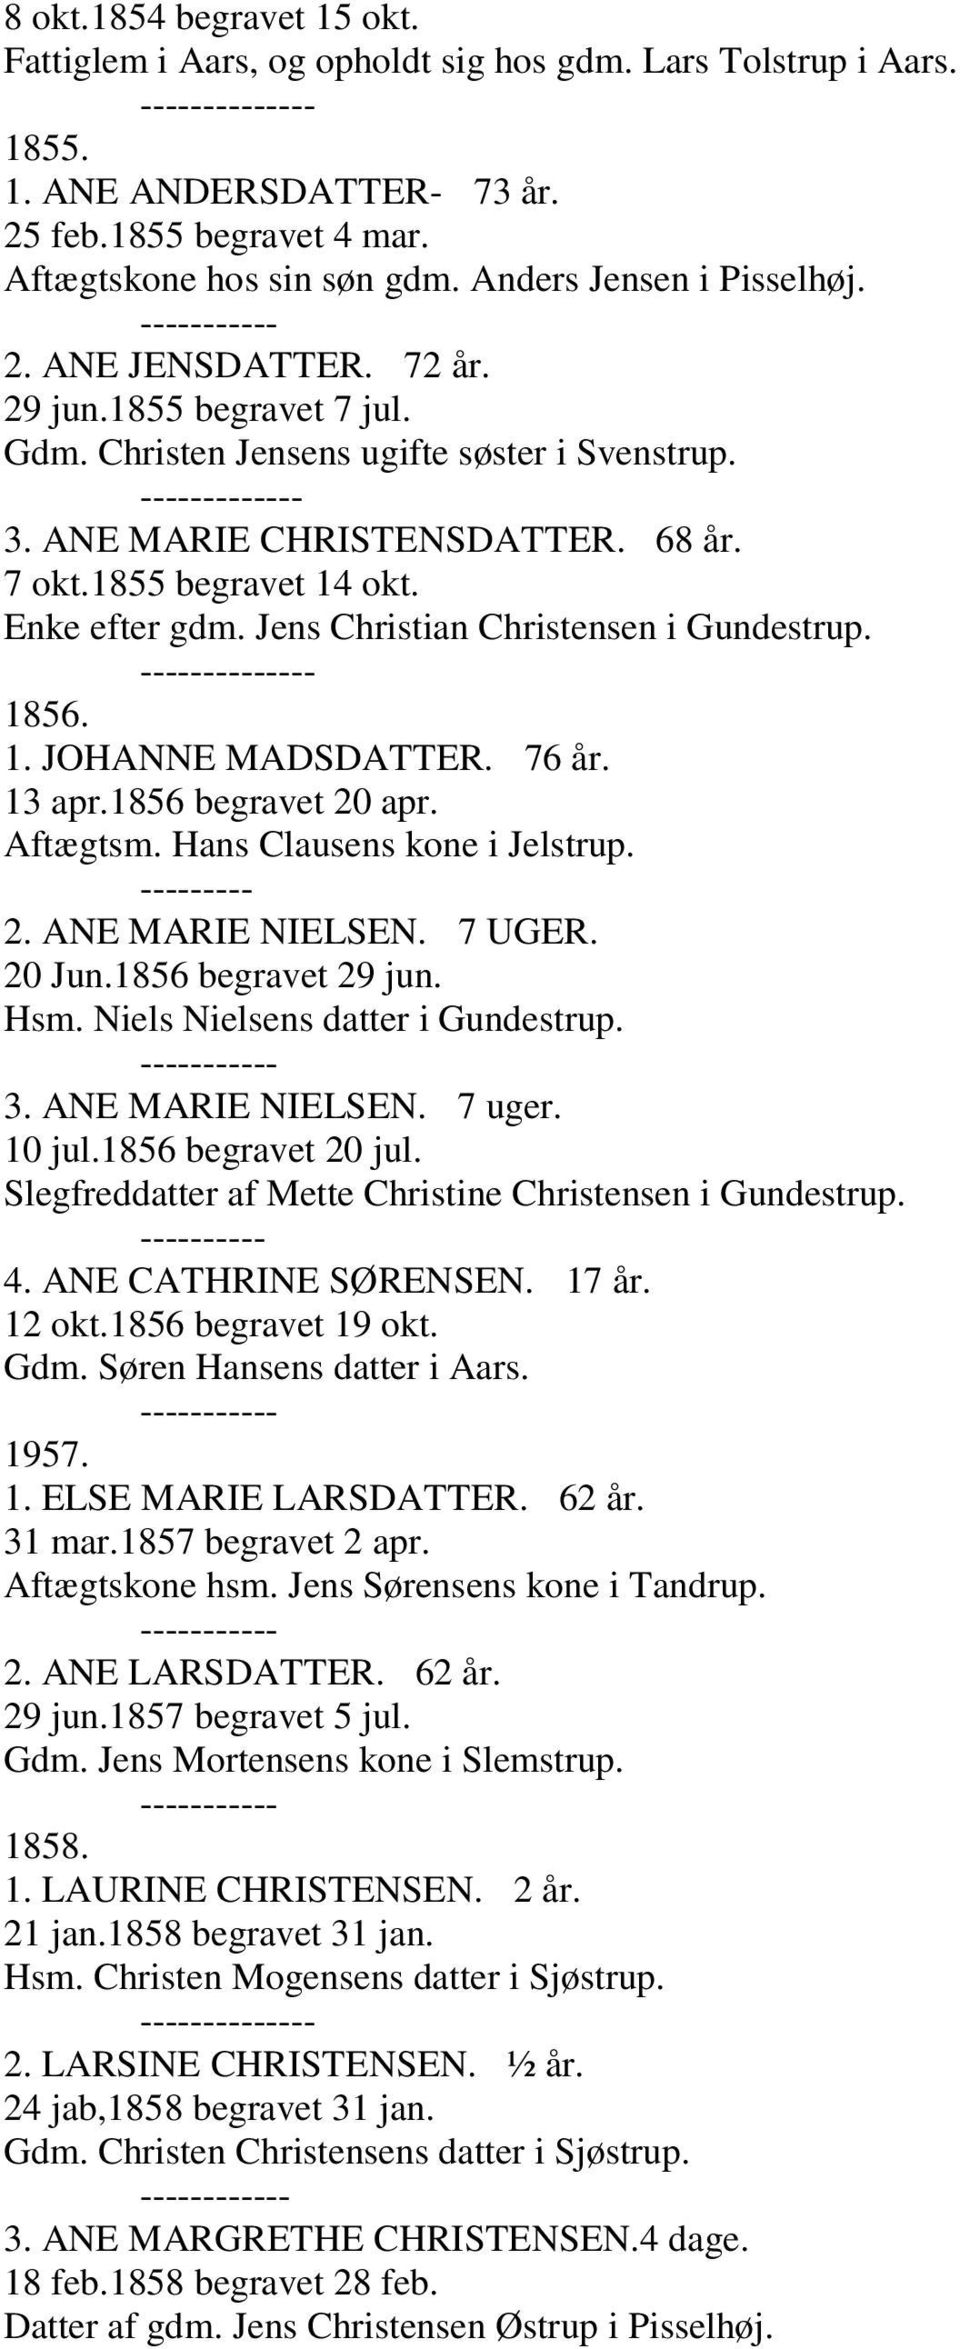 Enke efter gdm. Jens Christian Christensen i Gundestrup. --- 1856. 1. JOHANNE MADSDATTER. 76 år. 13 apr.1856 begravet 20 apr. Aftægtsm. Hans Clausens kone i Jelstrup. --------- 2. ANE MARIE NIELSEN.